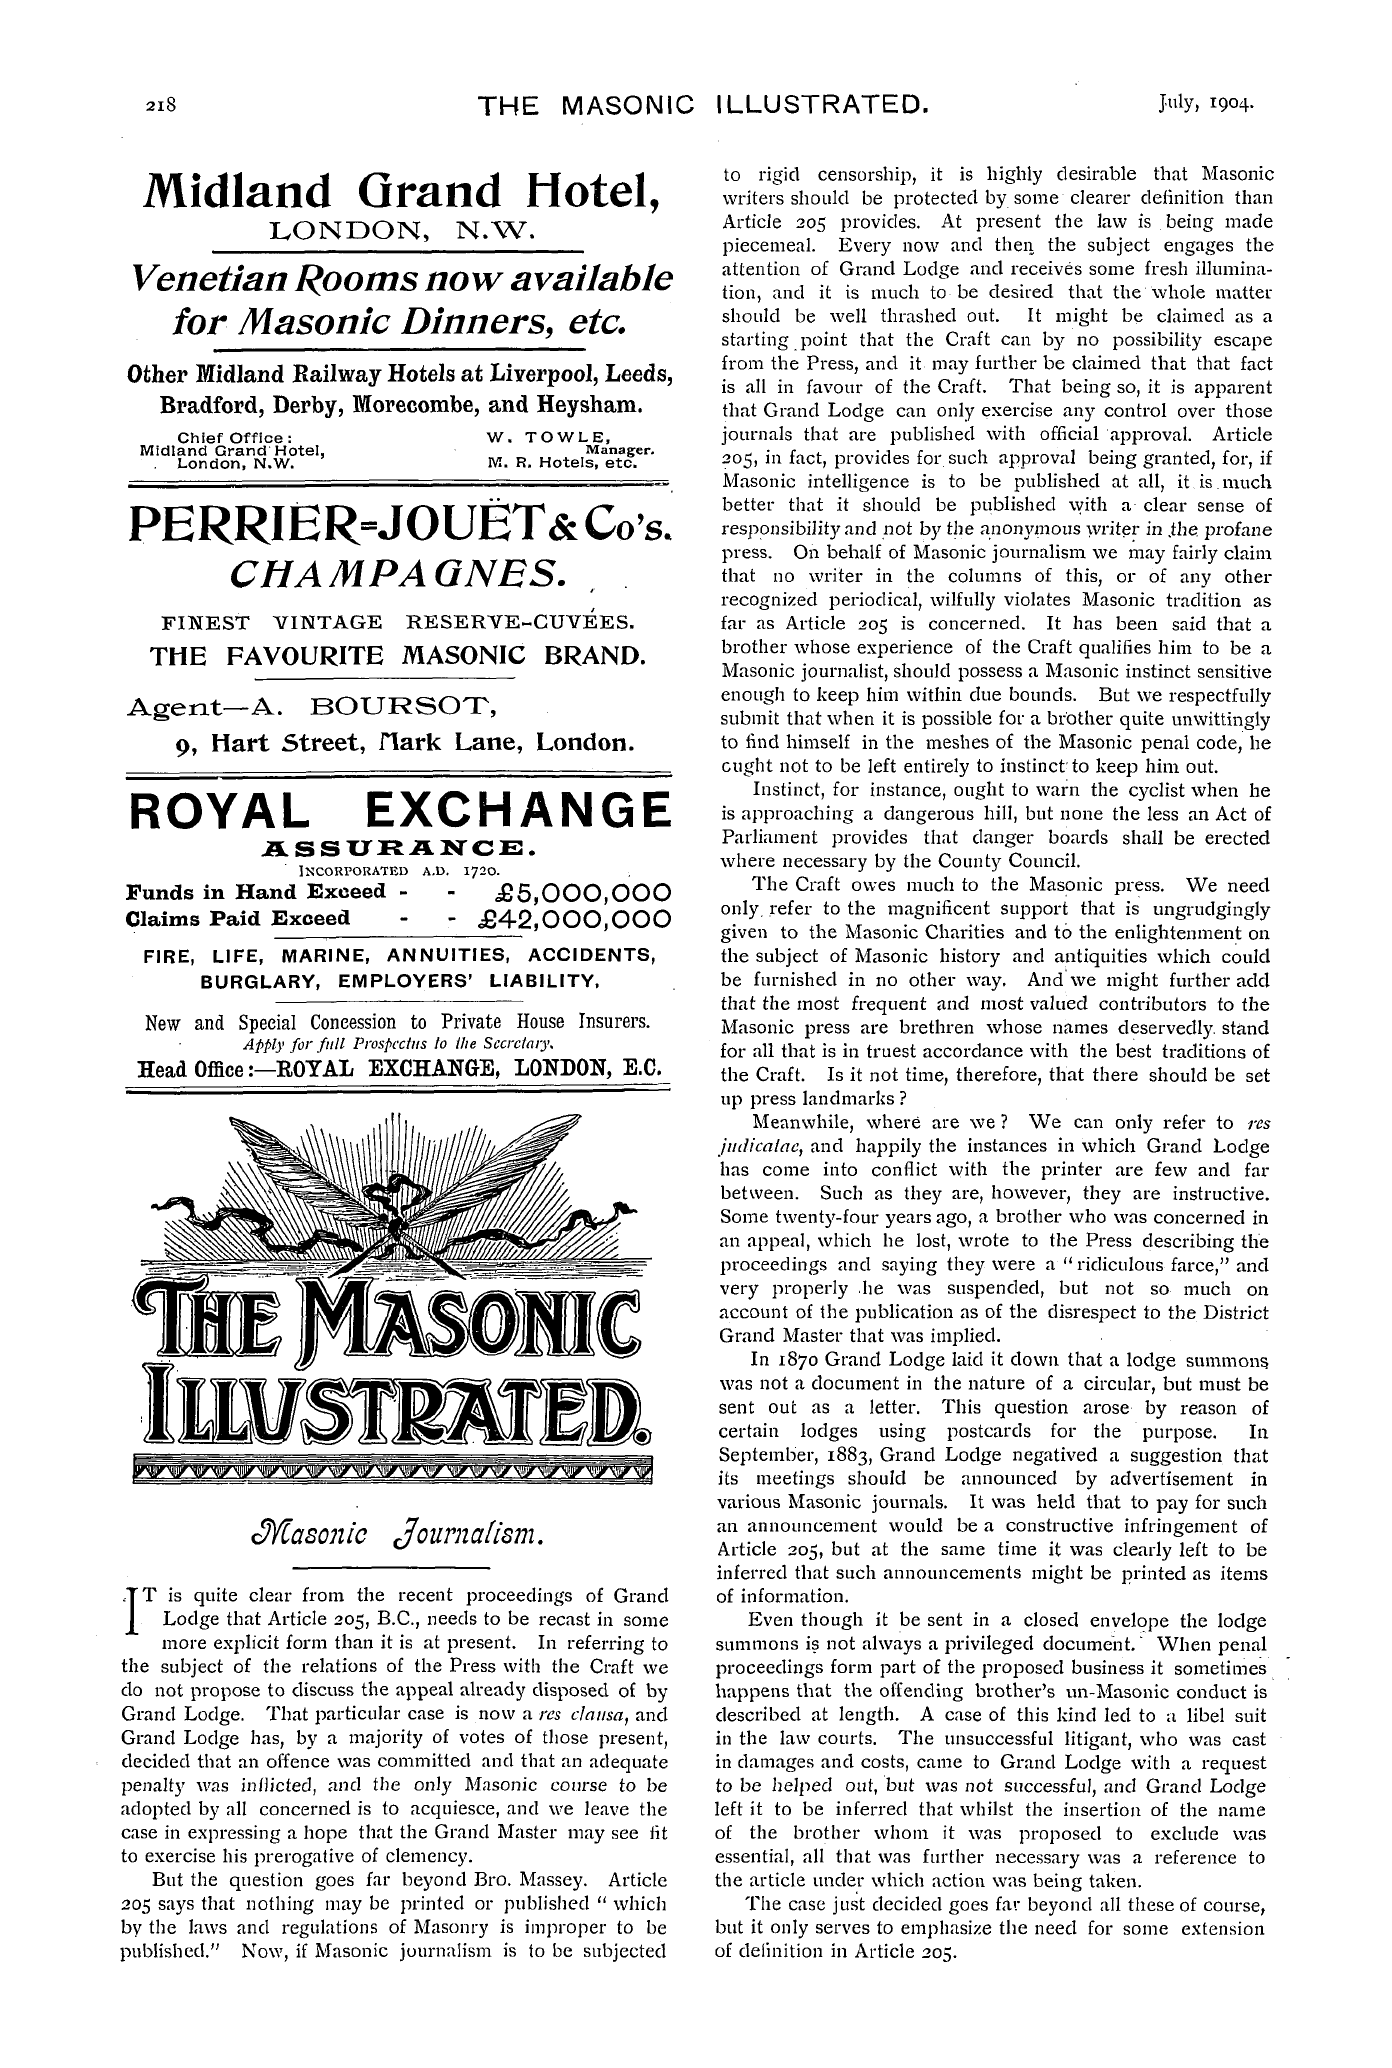 The Masonic Illustrated: 1904-07-01 - Ad01204